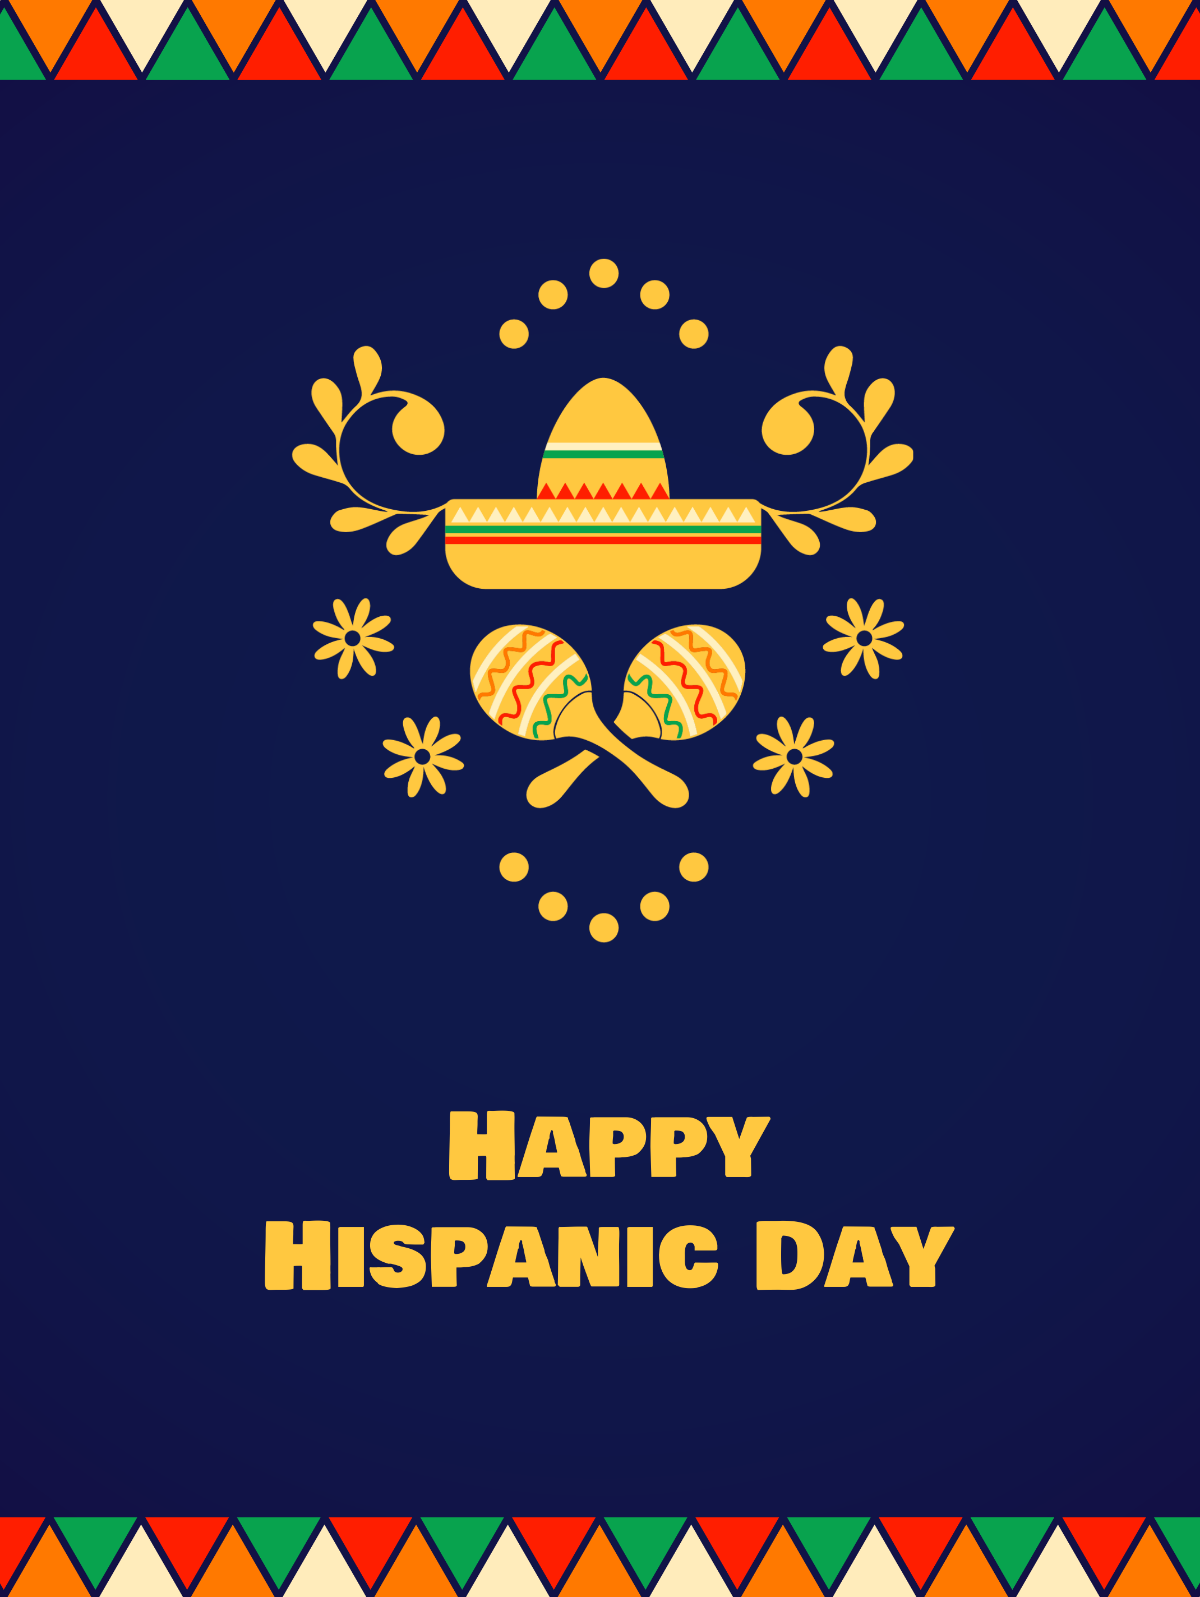 Hispanic Day Threads Post